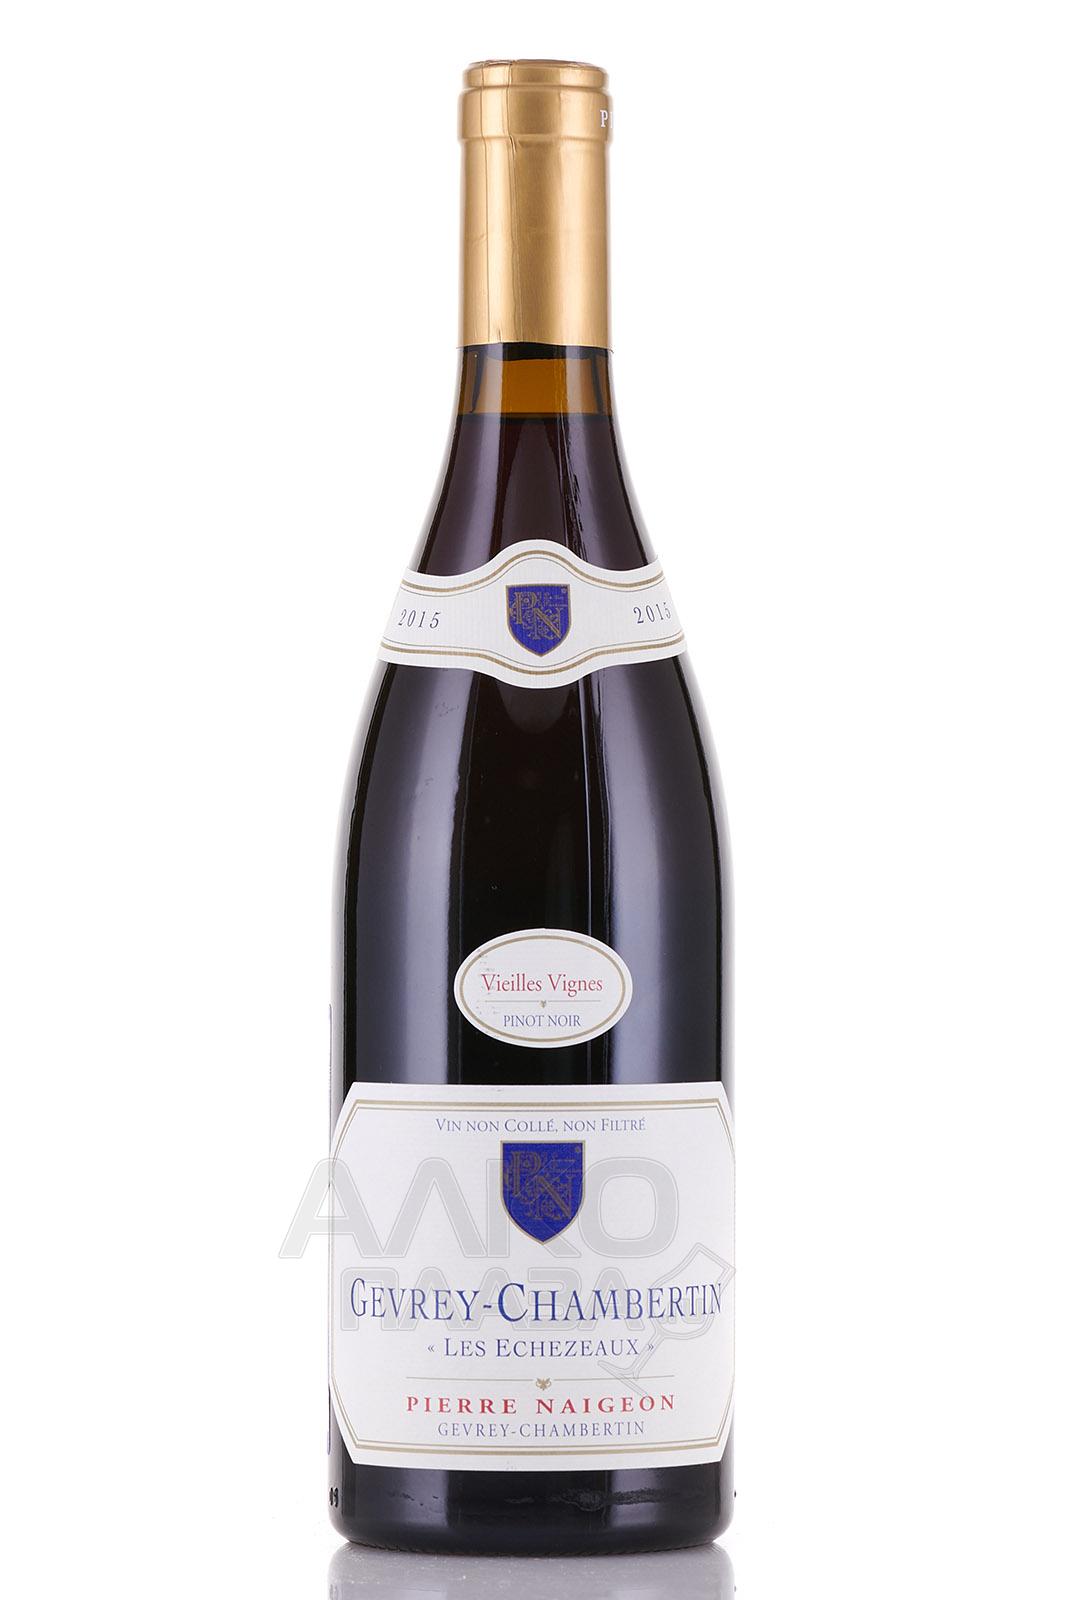 Pierre Naigeon Gevrey-Chambertin Les Echezeaux Vieilles Vignes AOC - вино Пьер Нежон Жевре-Шамбертен Лез Эшезо Вьей Винь 0.75 л 2015 год